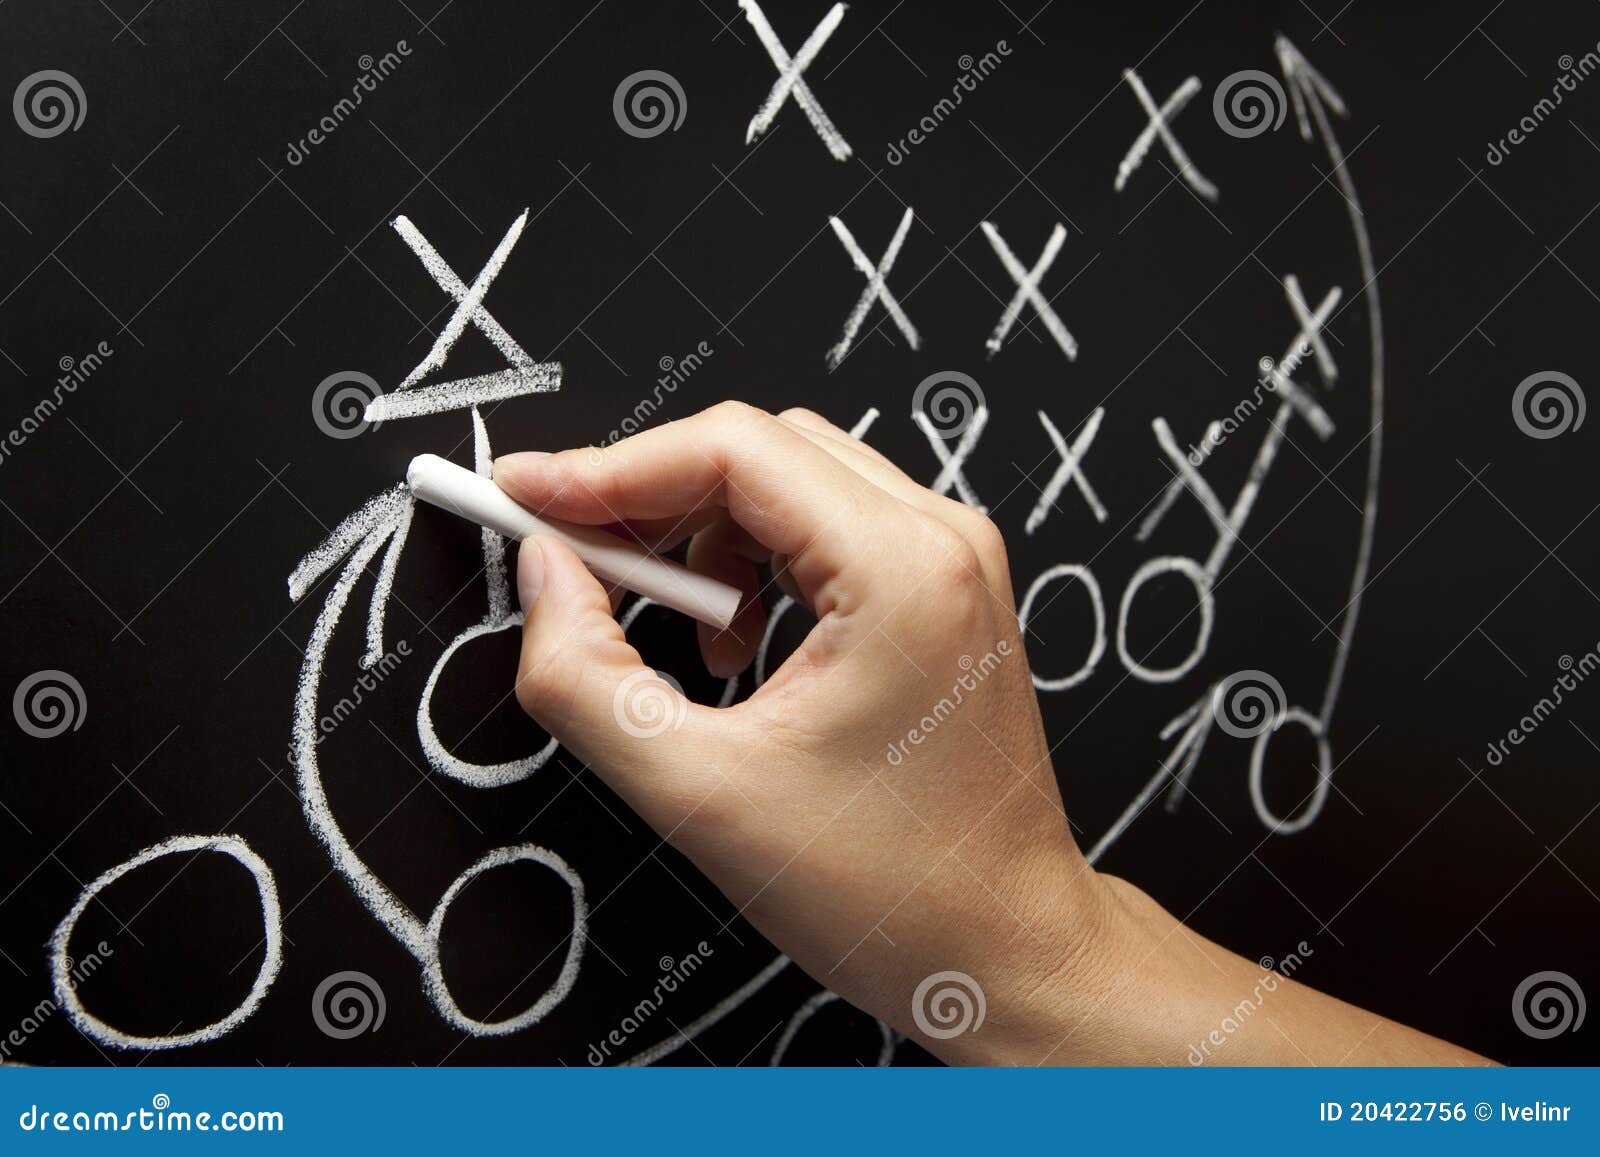 coach drawing american football playbook tactics